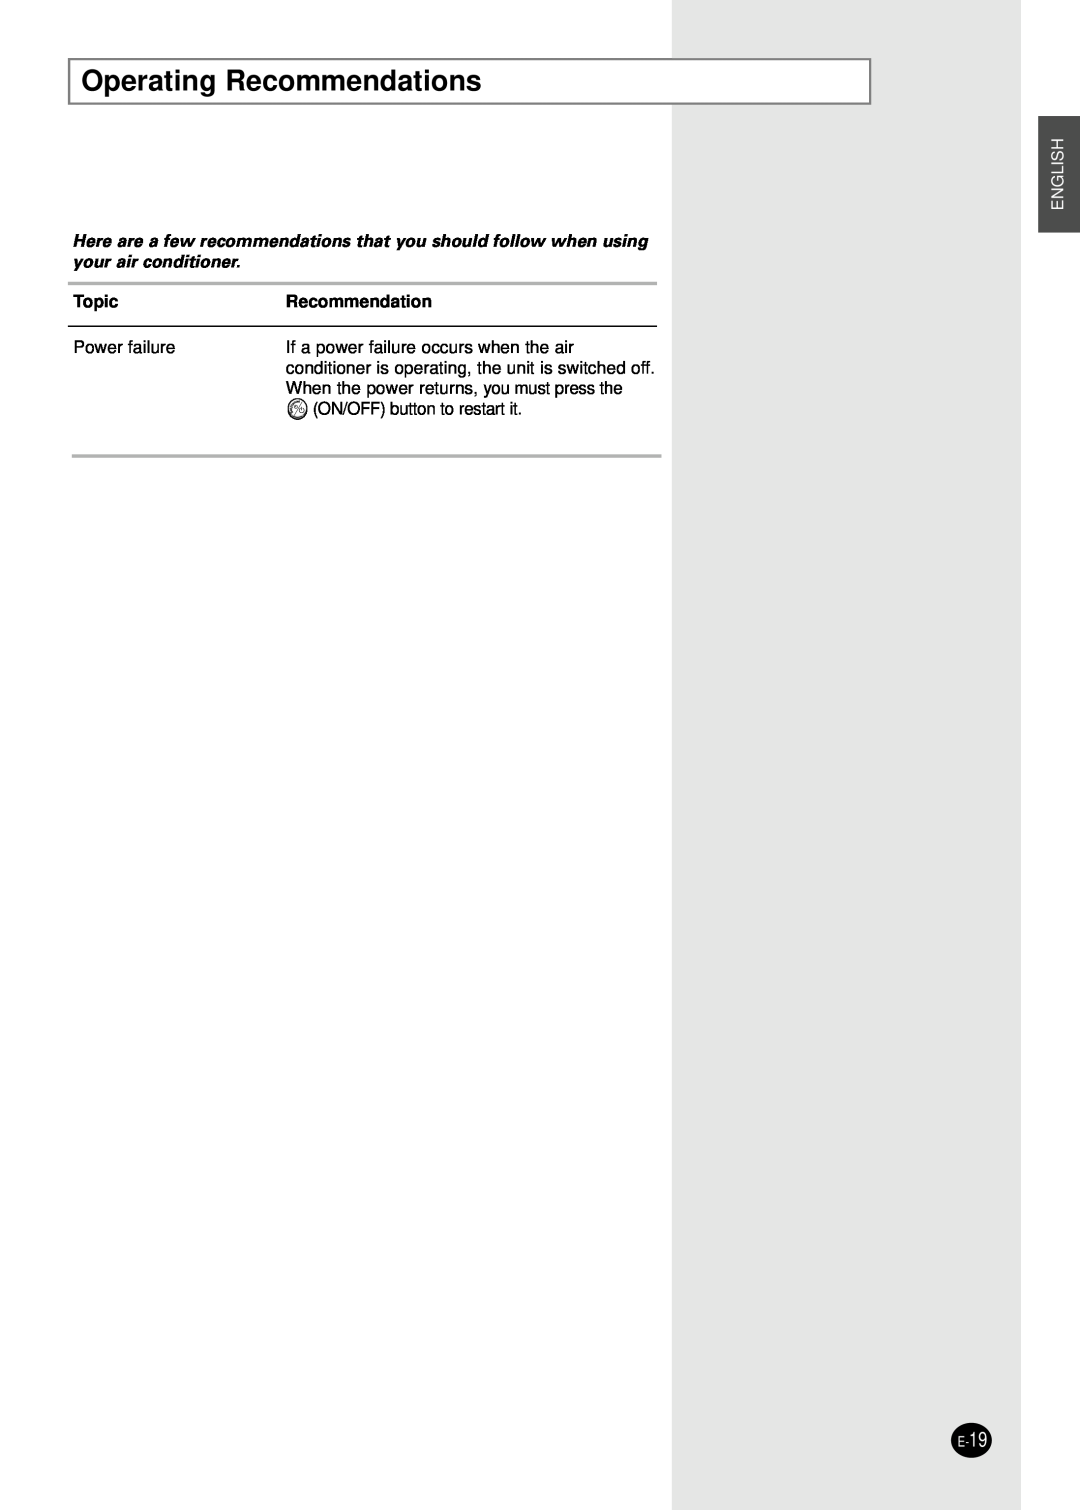 Samsung AM18B1(B2)C09 installation manual Operating Recommendations, English, TopicRecommendation, E-19 